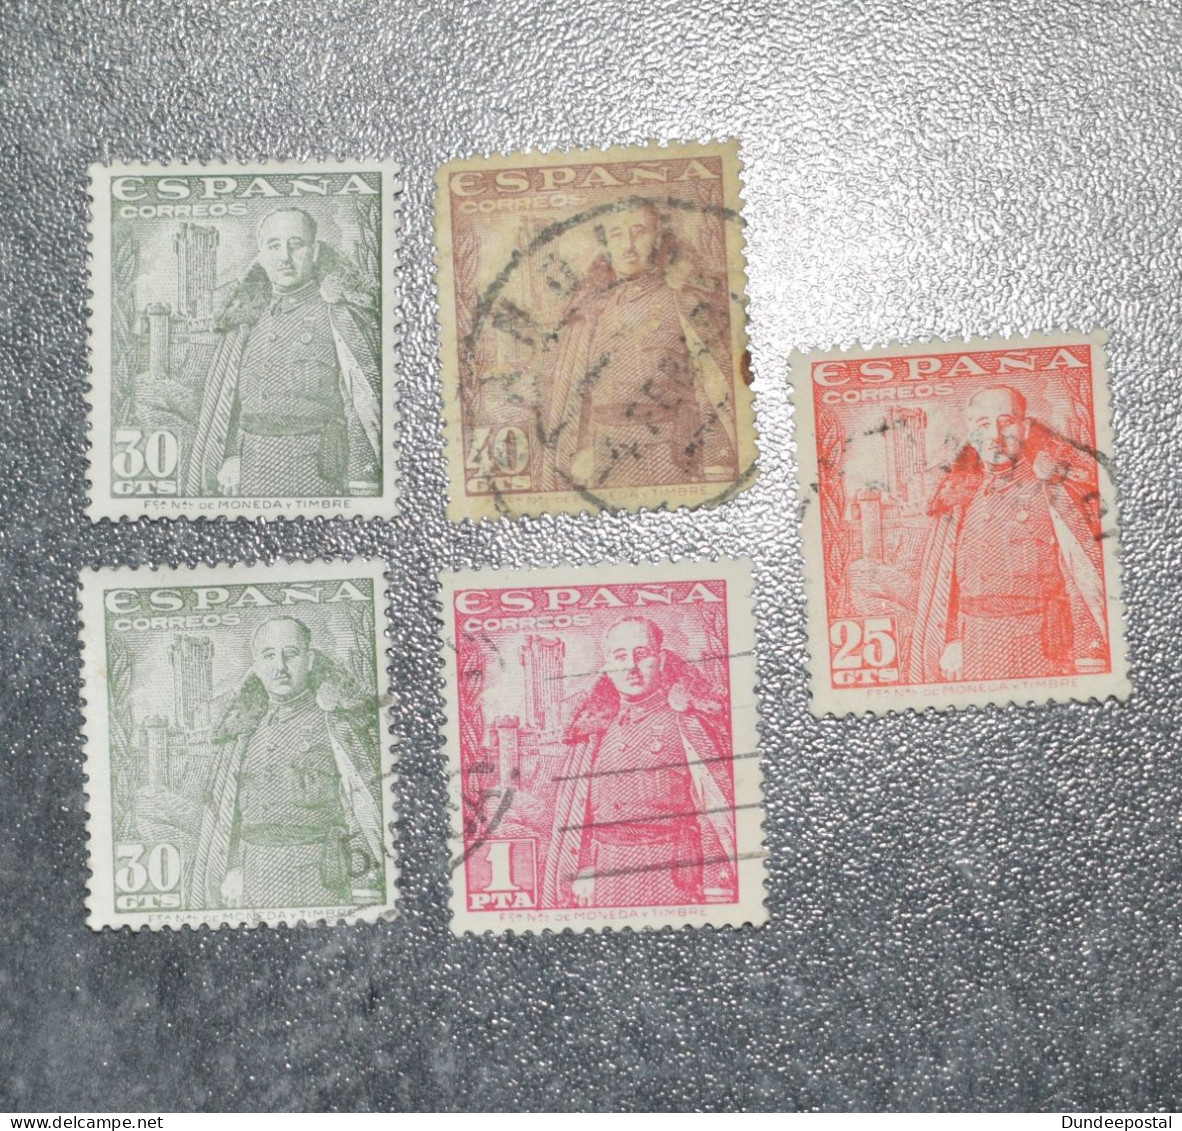 SPAIN  STAMPS  Franco 1948  ~~L@@K~~ - Used Stamps